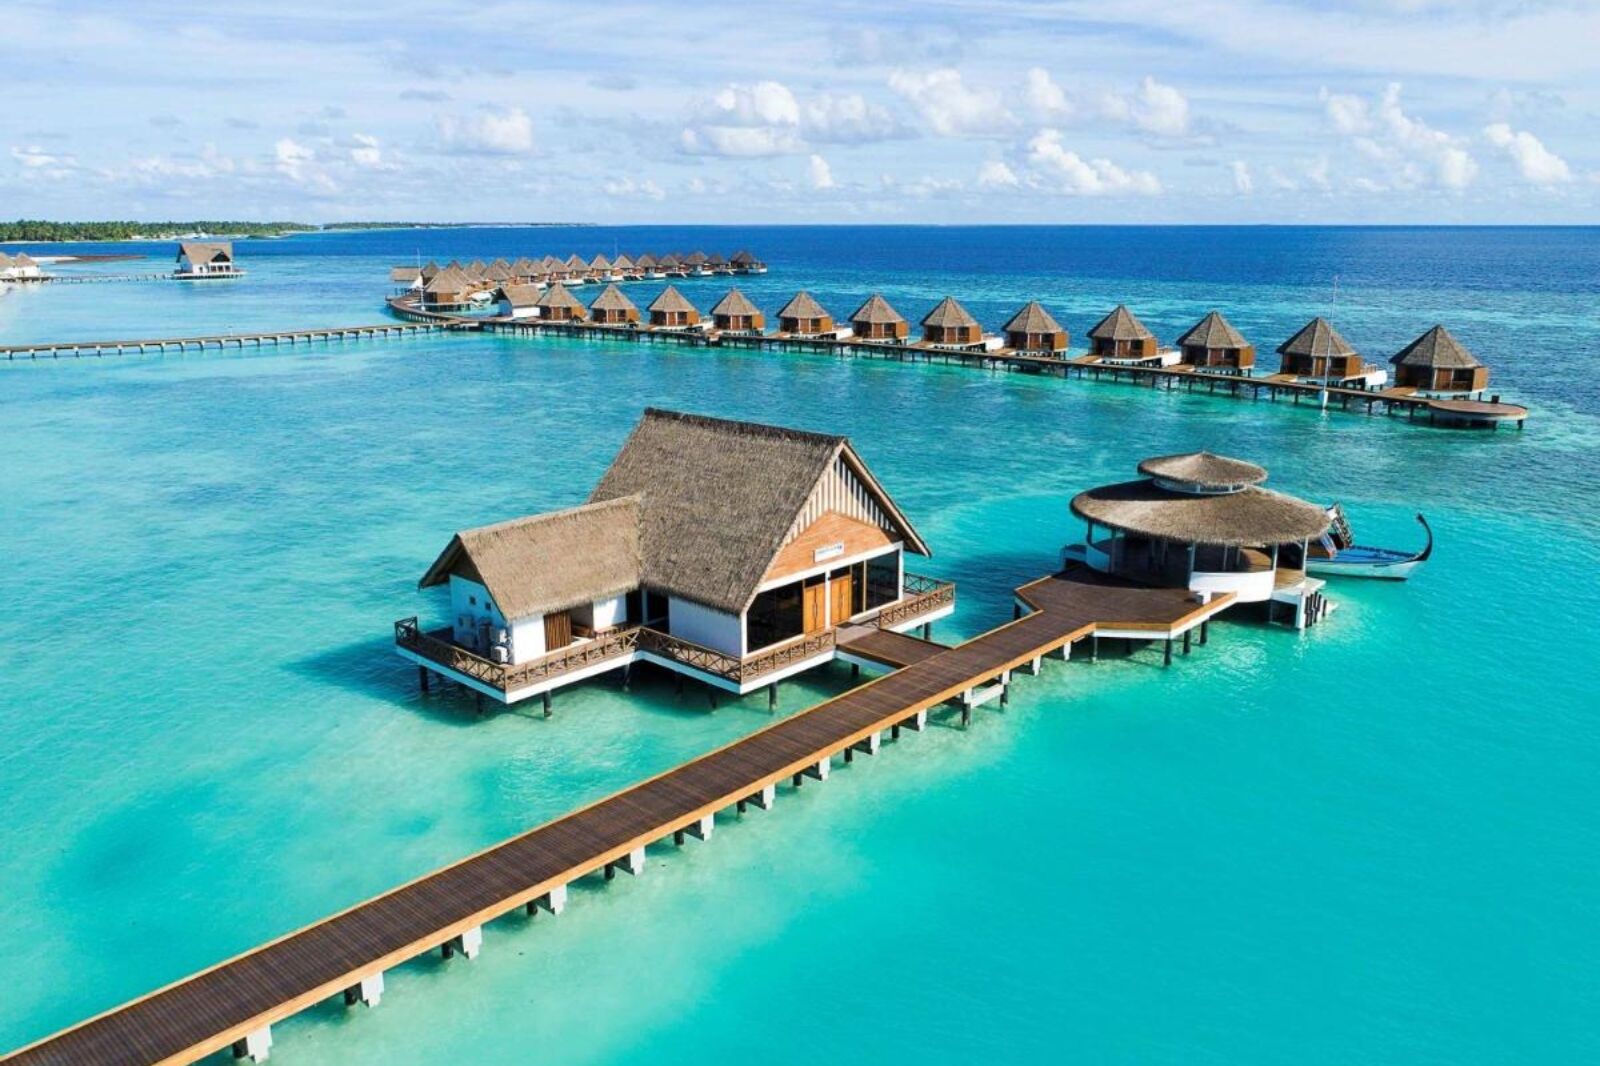 Mercure Maldives Kooddoo one of the best resorts in maldives